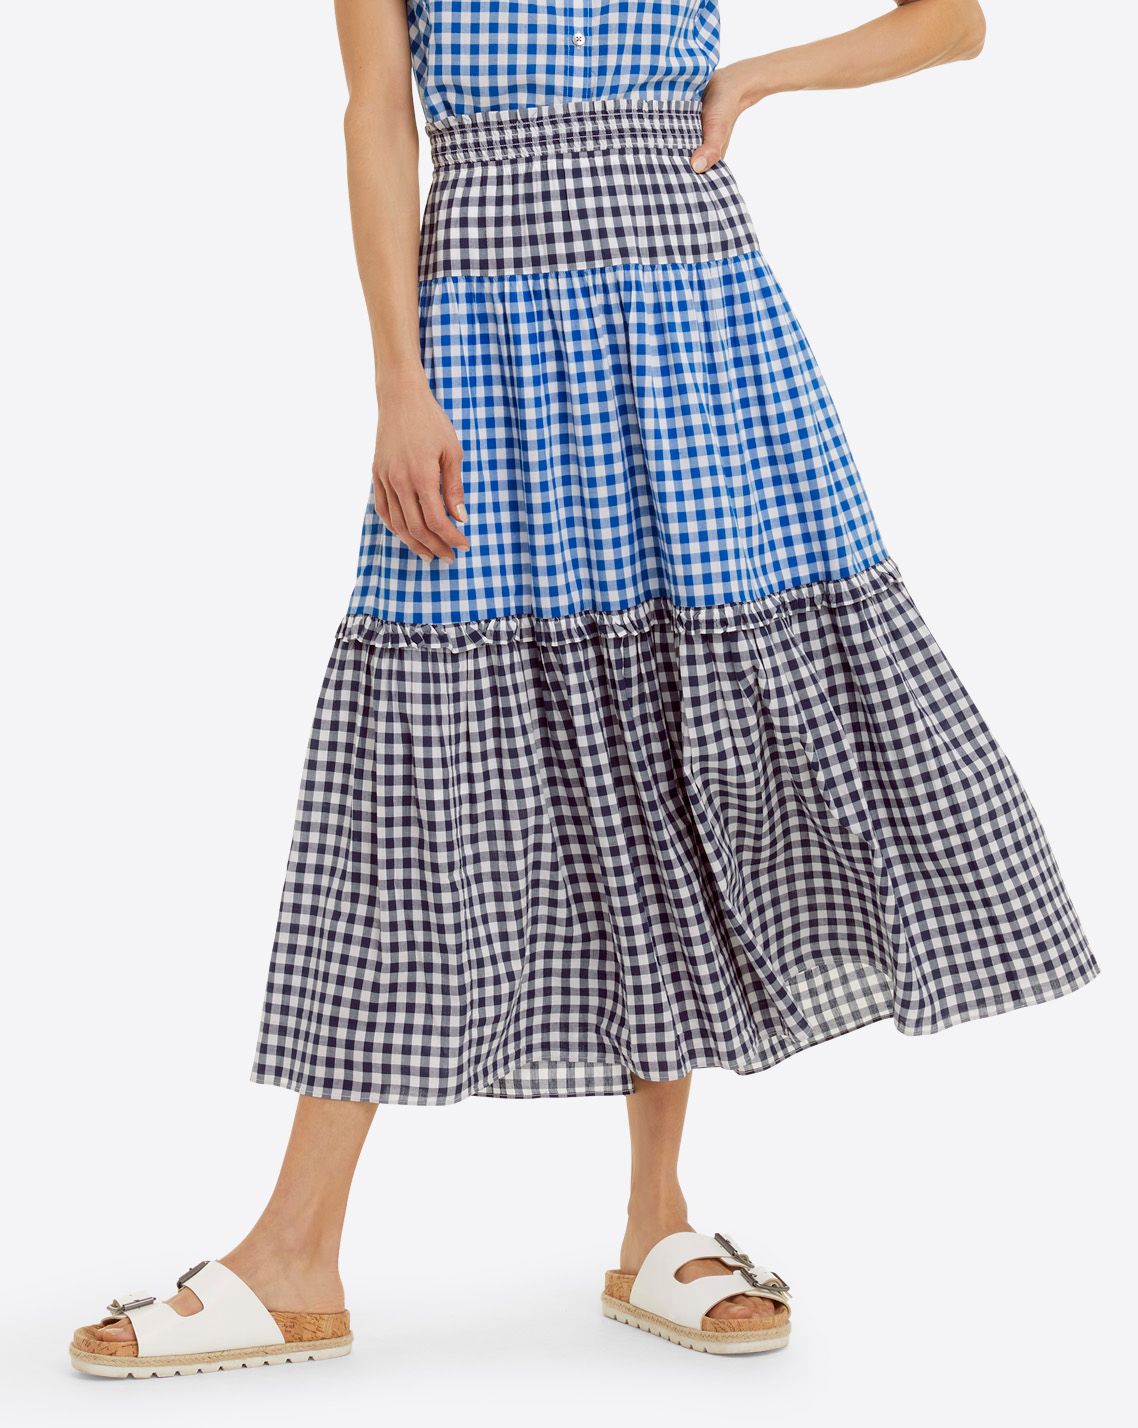 Peasant Skirt in Blue Gingham